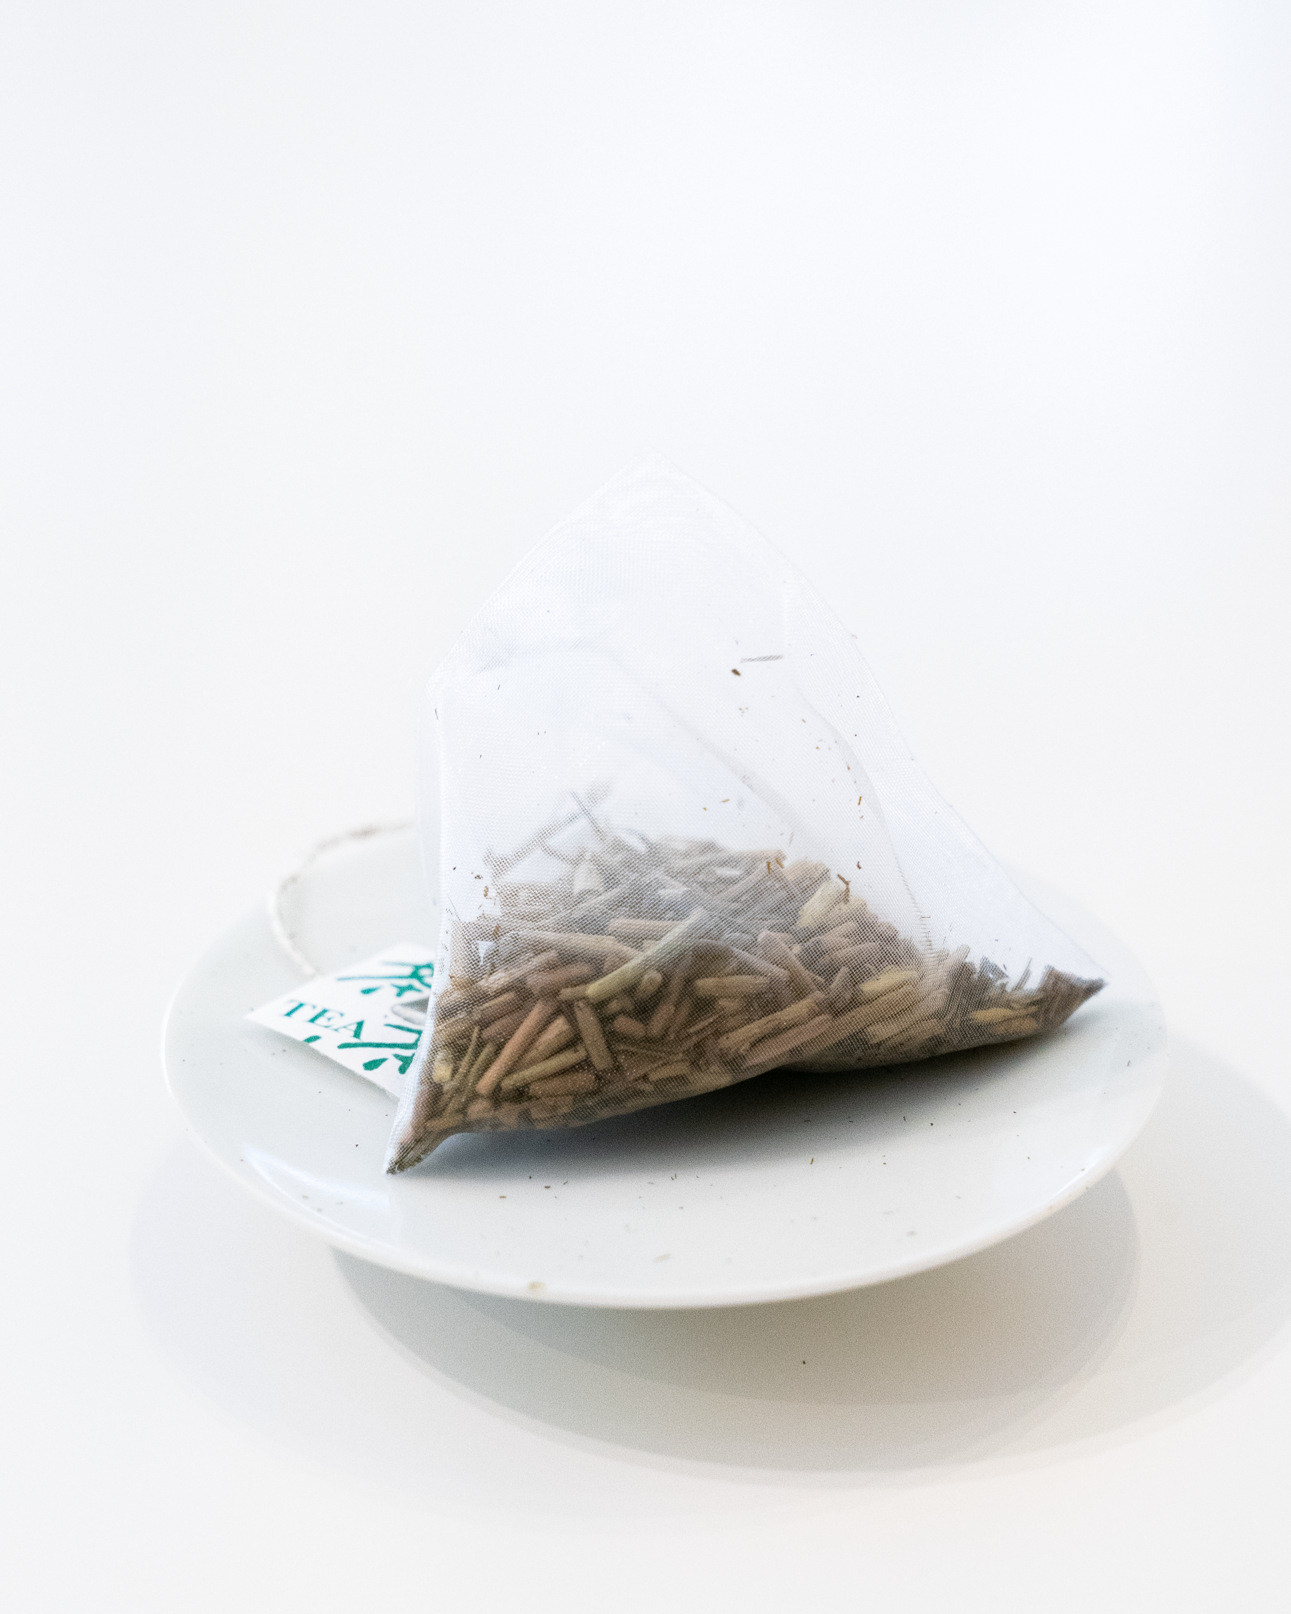 Houjicha - Roasted Green Tea Bags - Small